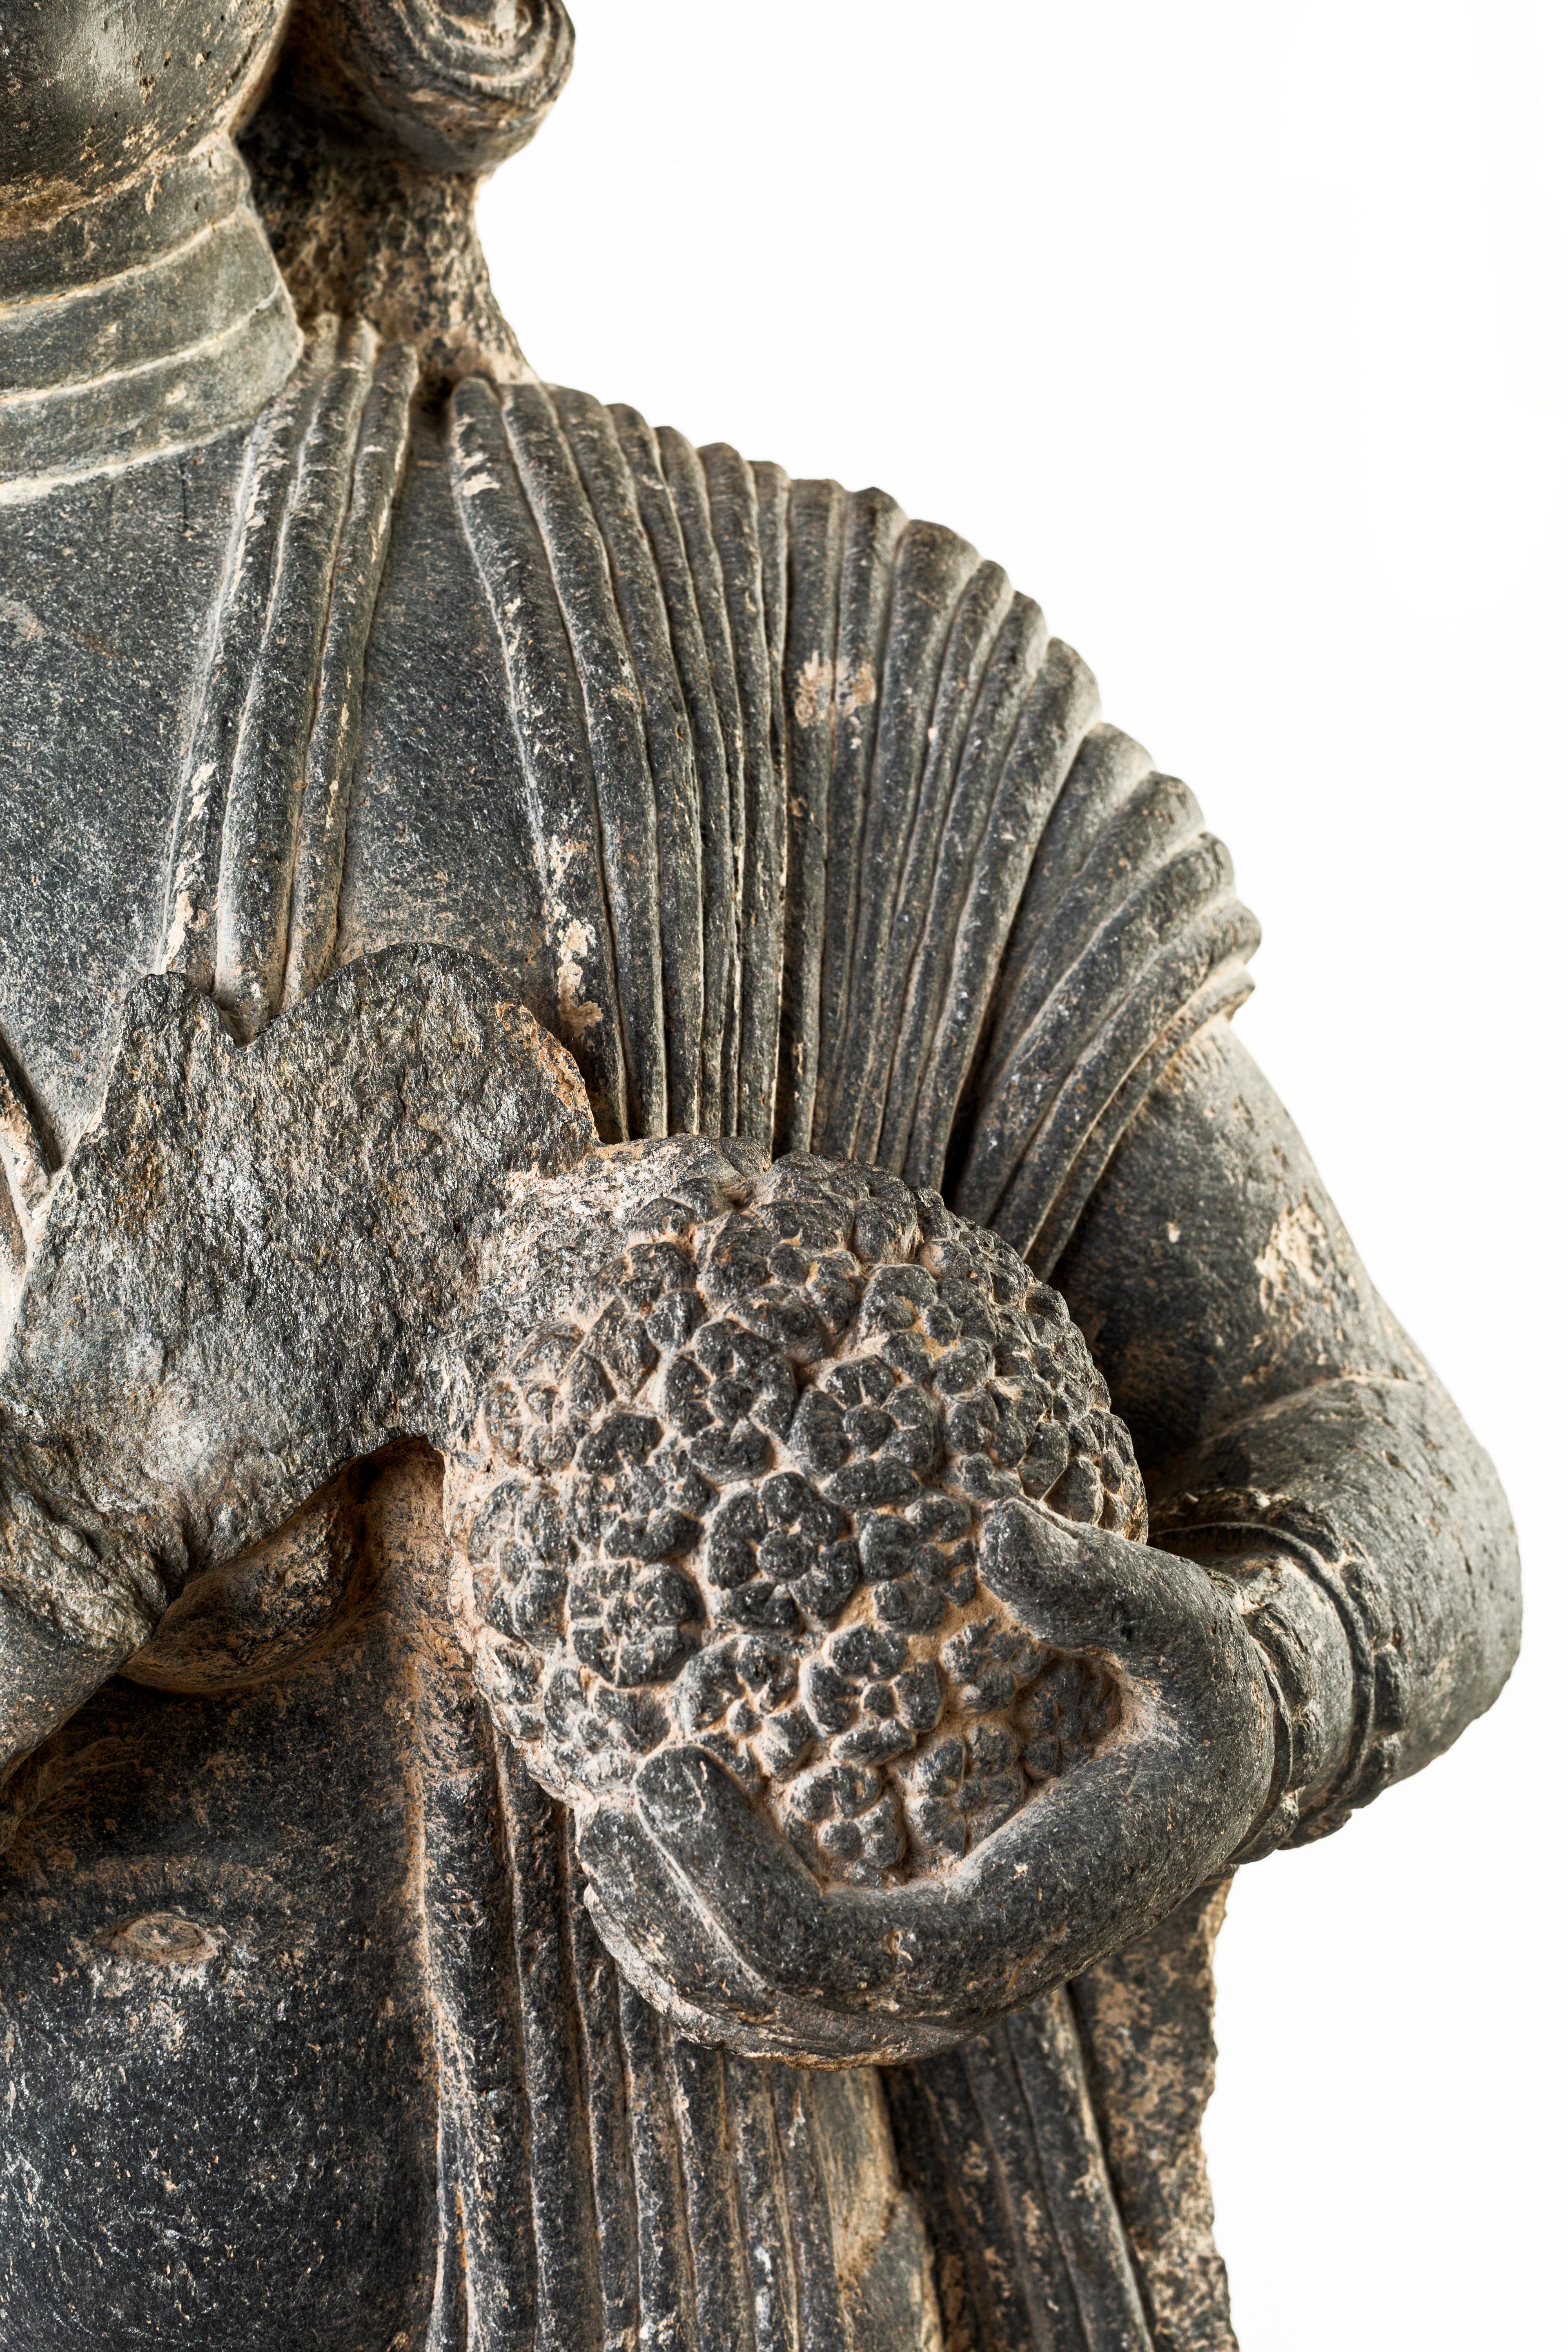 Ancient Gandhara Sculpture - 2nd/3rd Century - Black Figurative Sculpture by Unknown